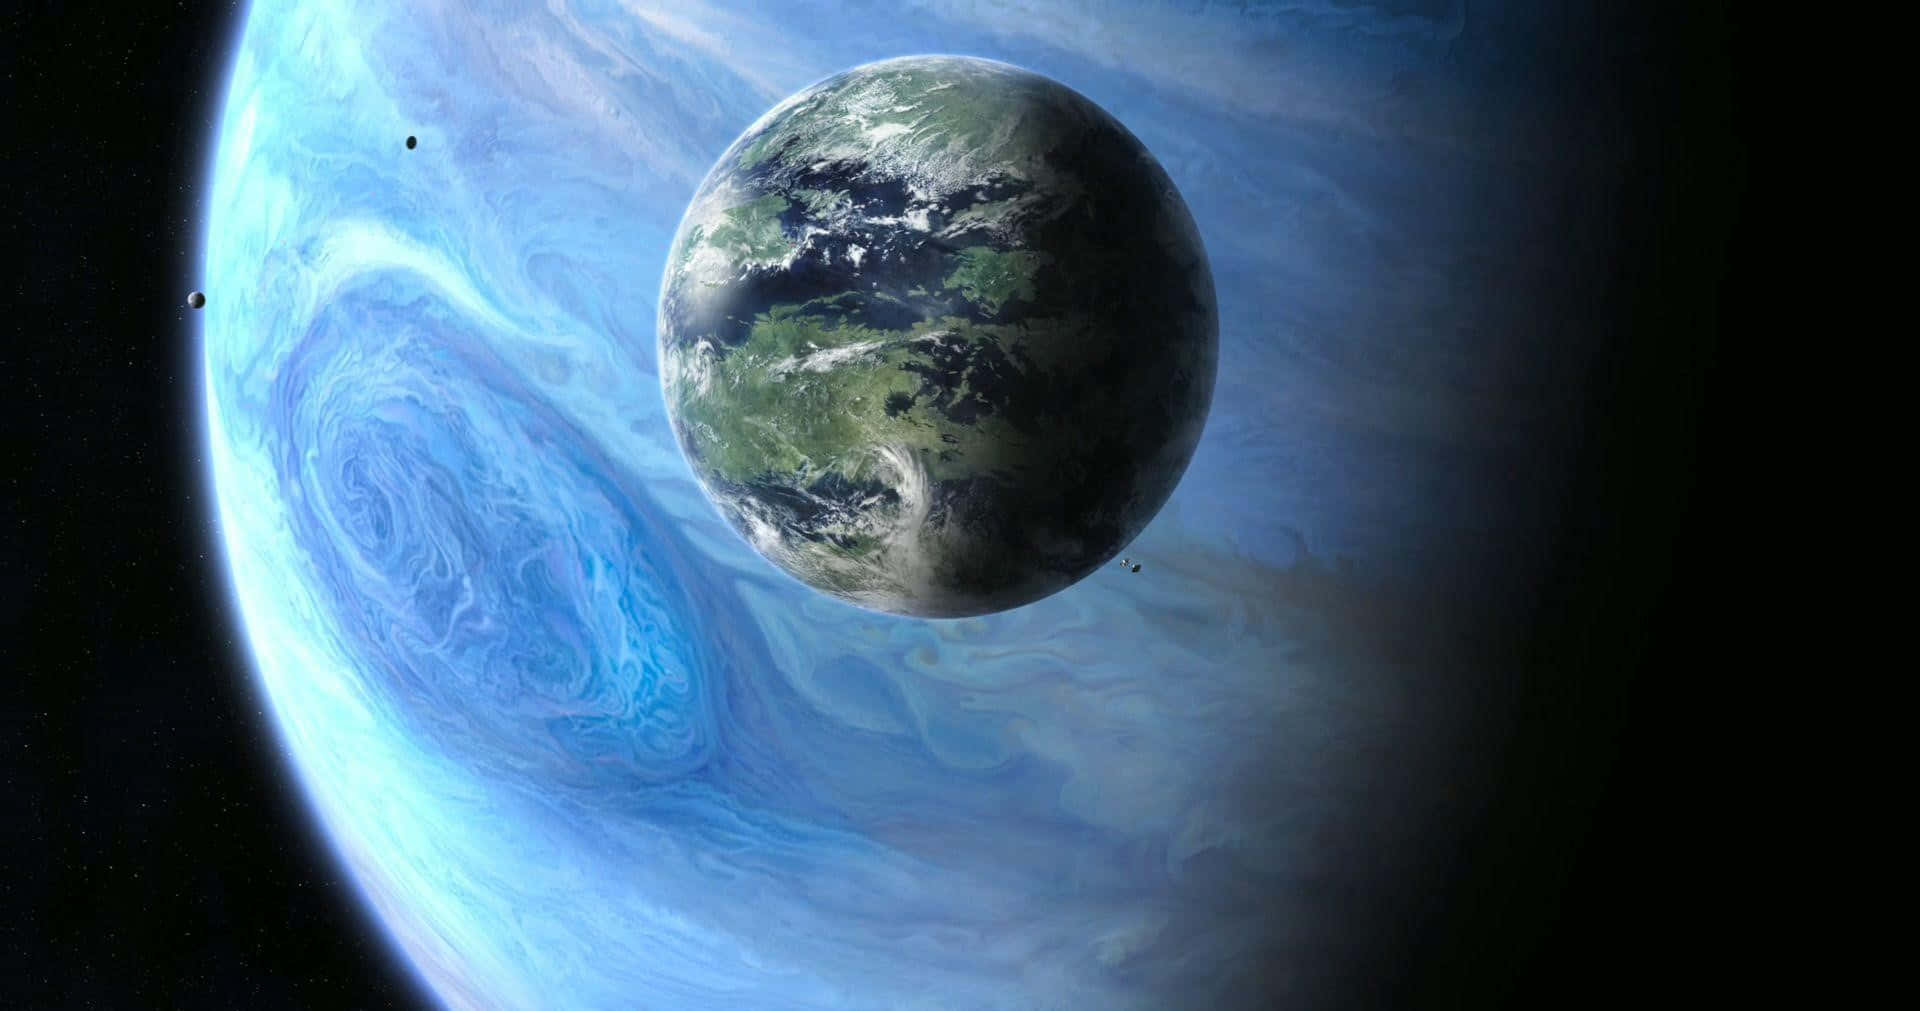 The Blue Planet - Earth's Planetary Neighbor Neptune